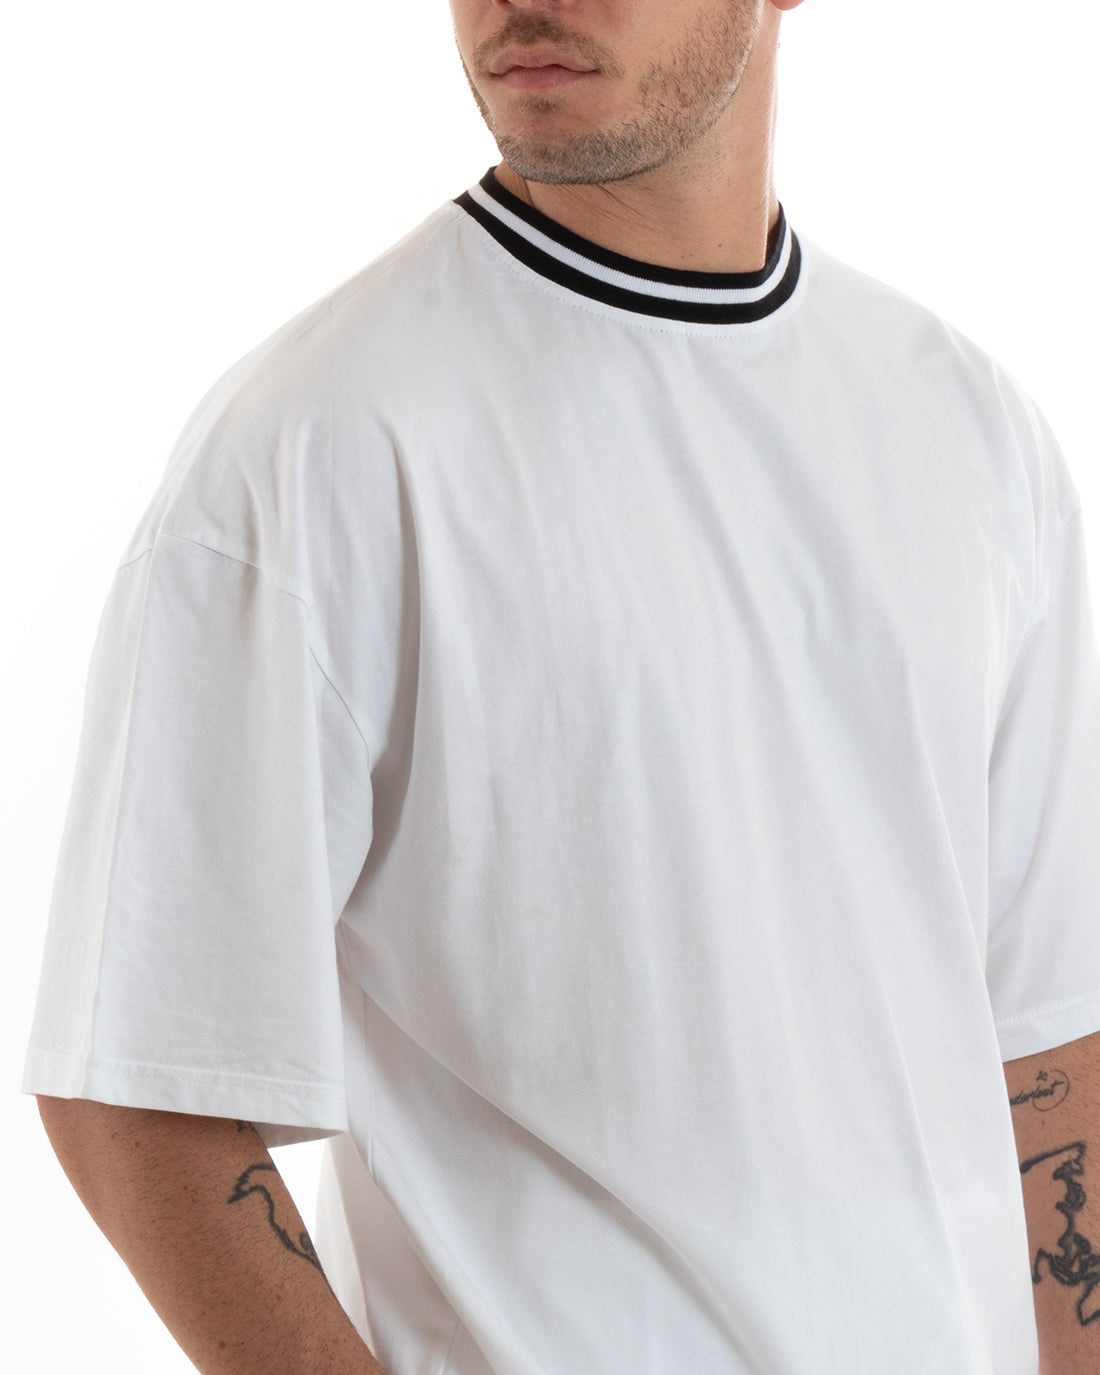 Completo Set Coordinato Uomo Cotone Viscosa T-Shirt Bermuda Outfit Bianco GIOSAL-OU2310A